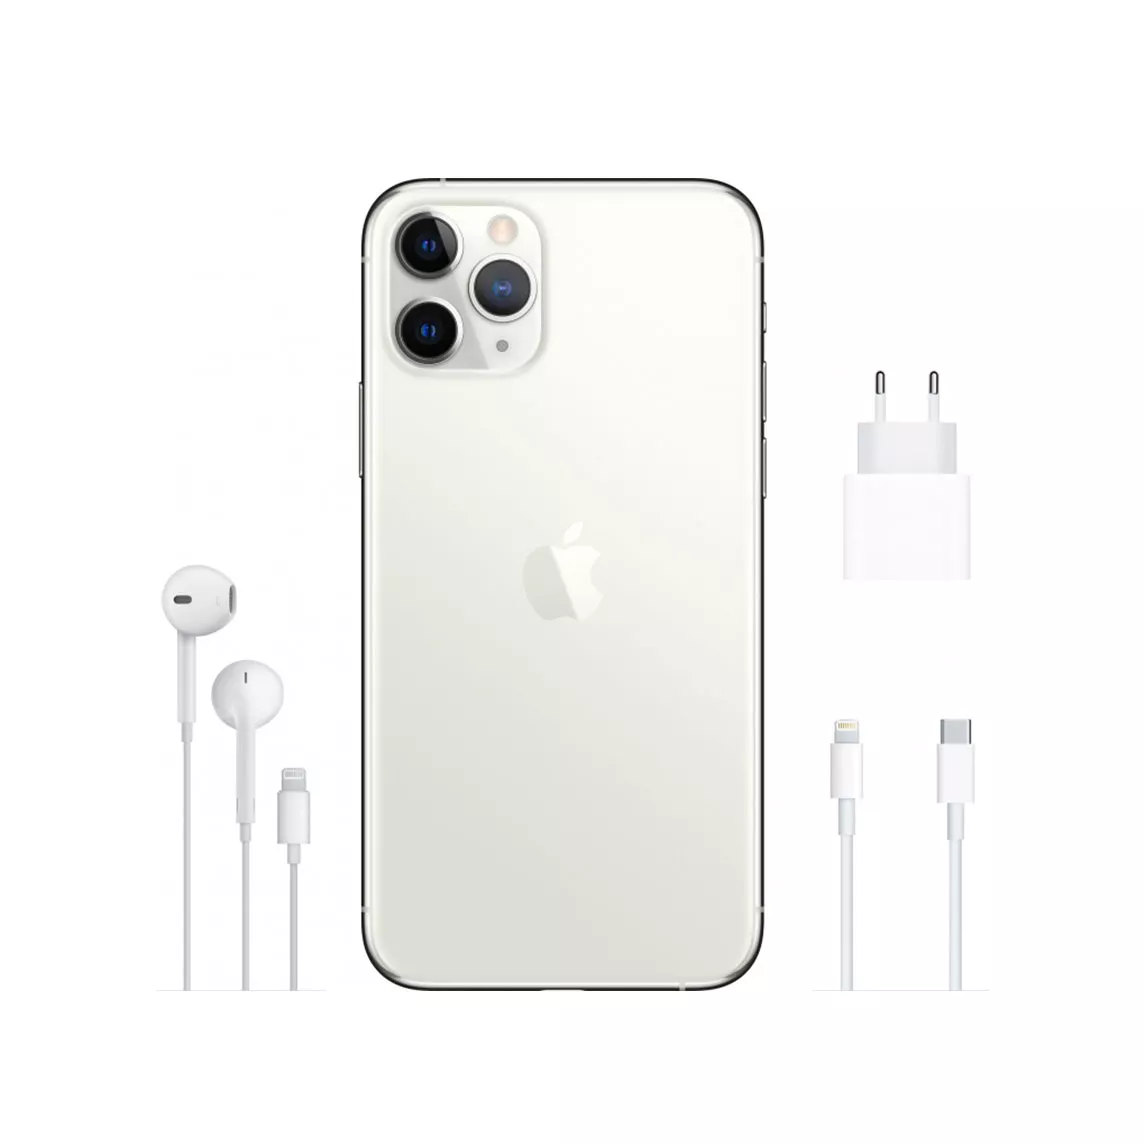 Apple iPhone 11 Pro Max 512ГБ Серебристый (Silver)